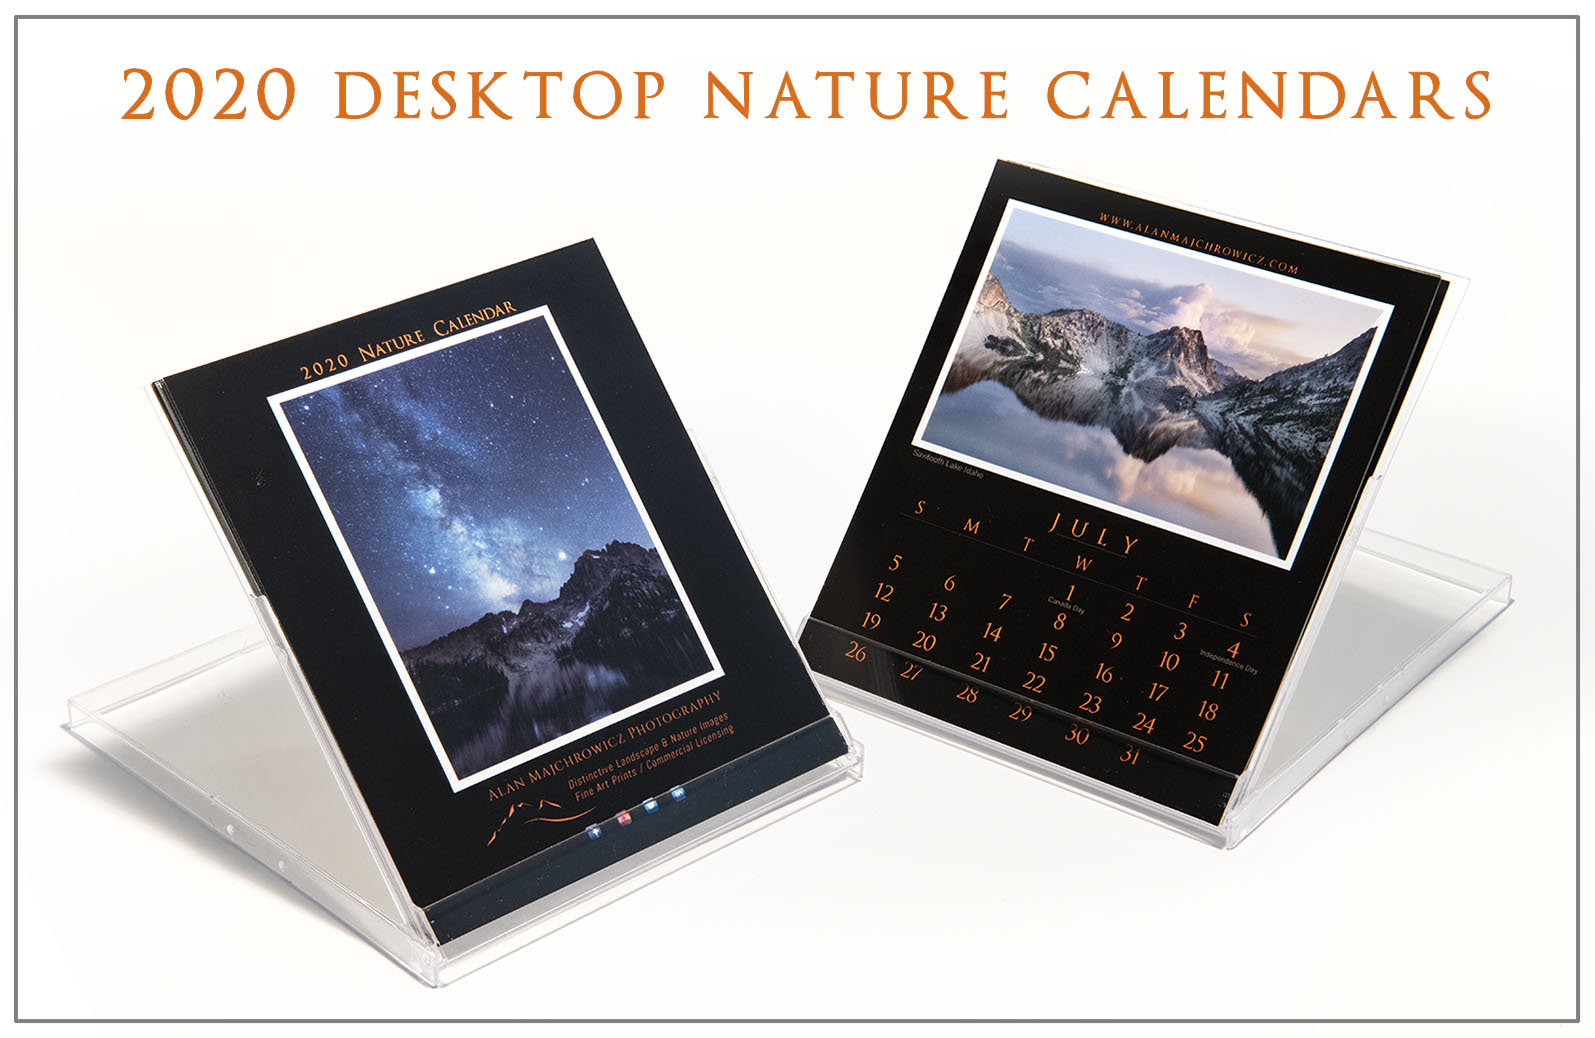 2020 Desktop Nature Calendar